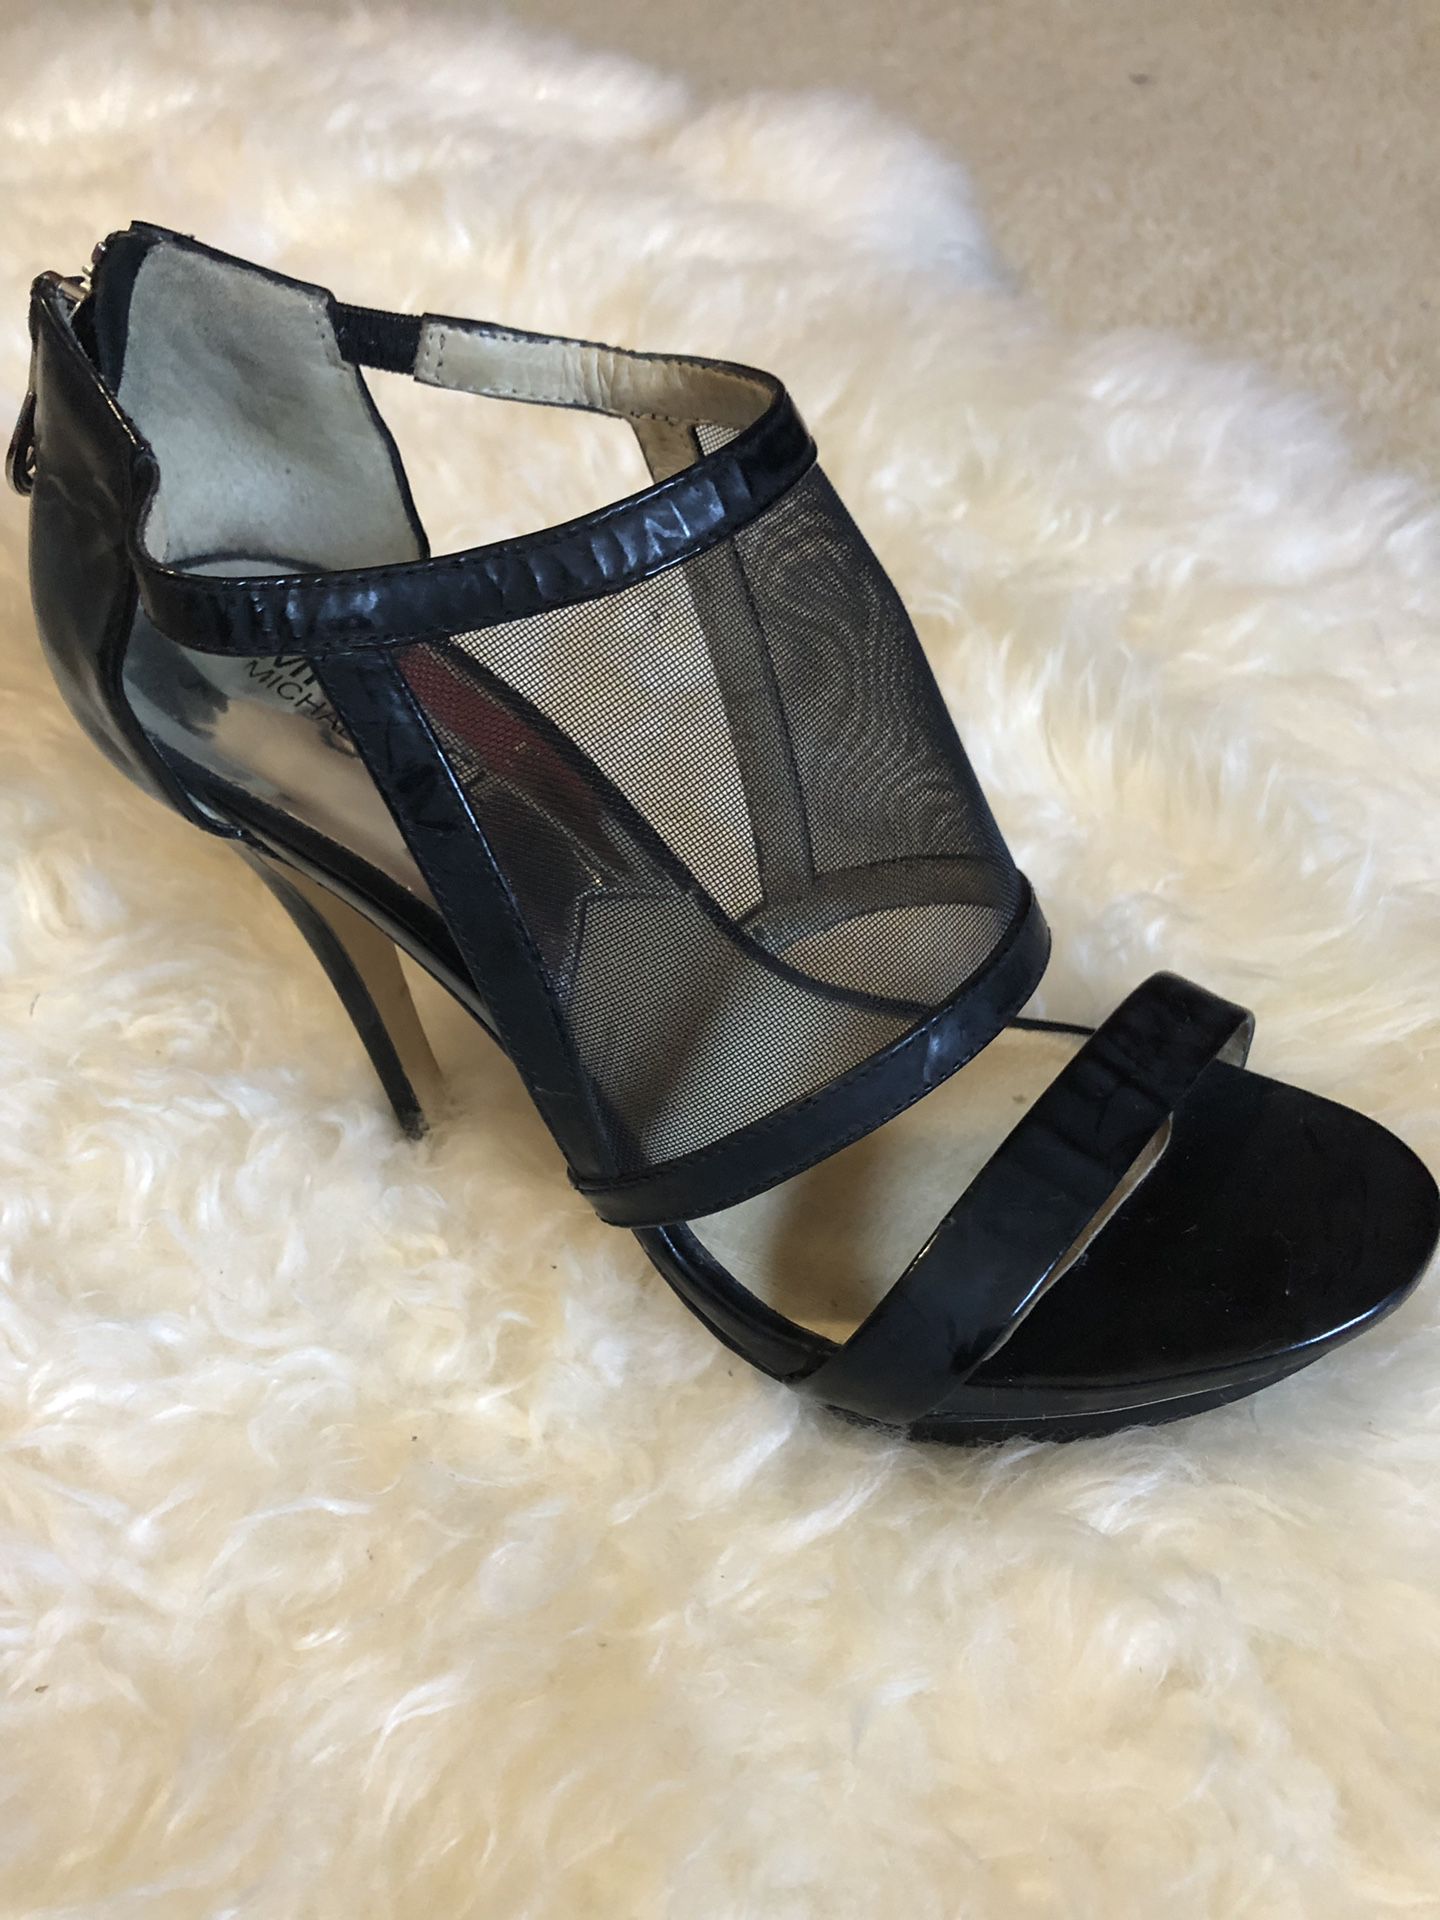 Black Michael Kors high-heeled shoe size 7 1/2